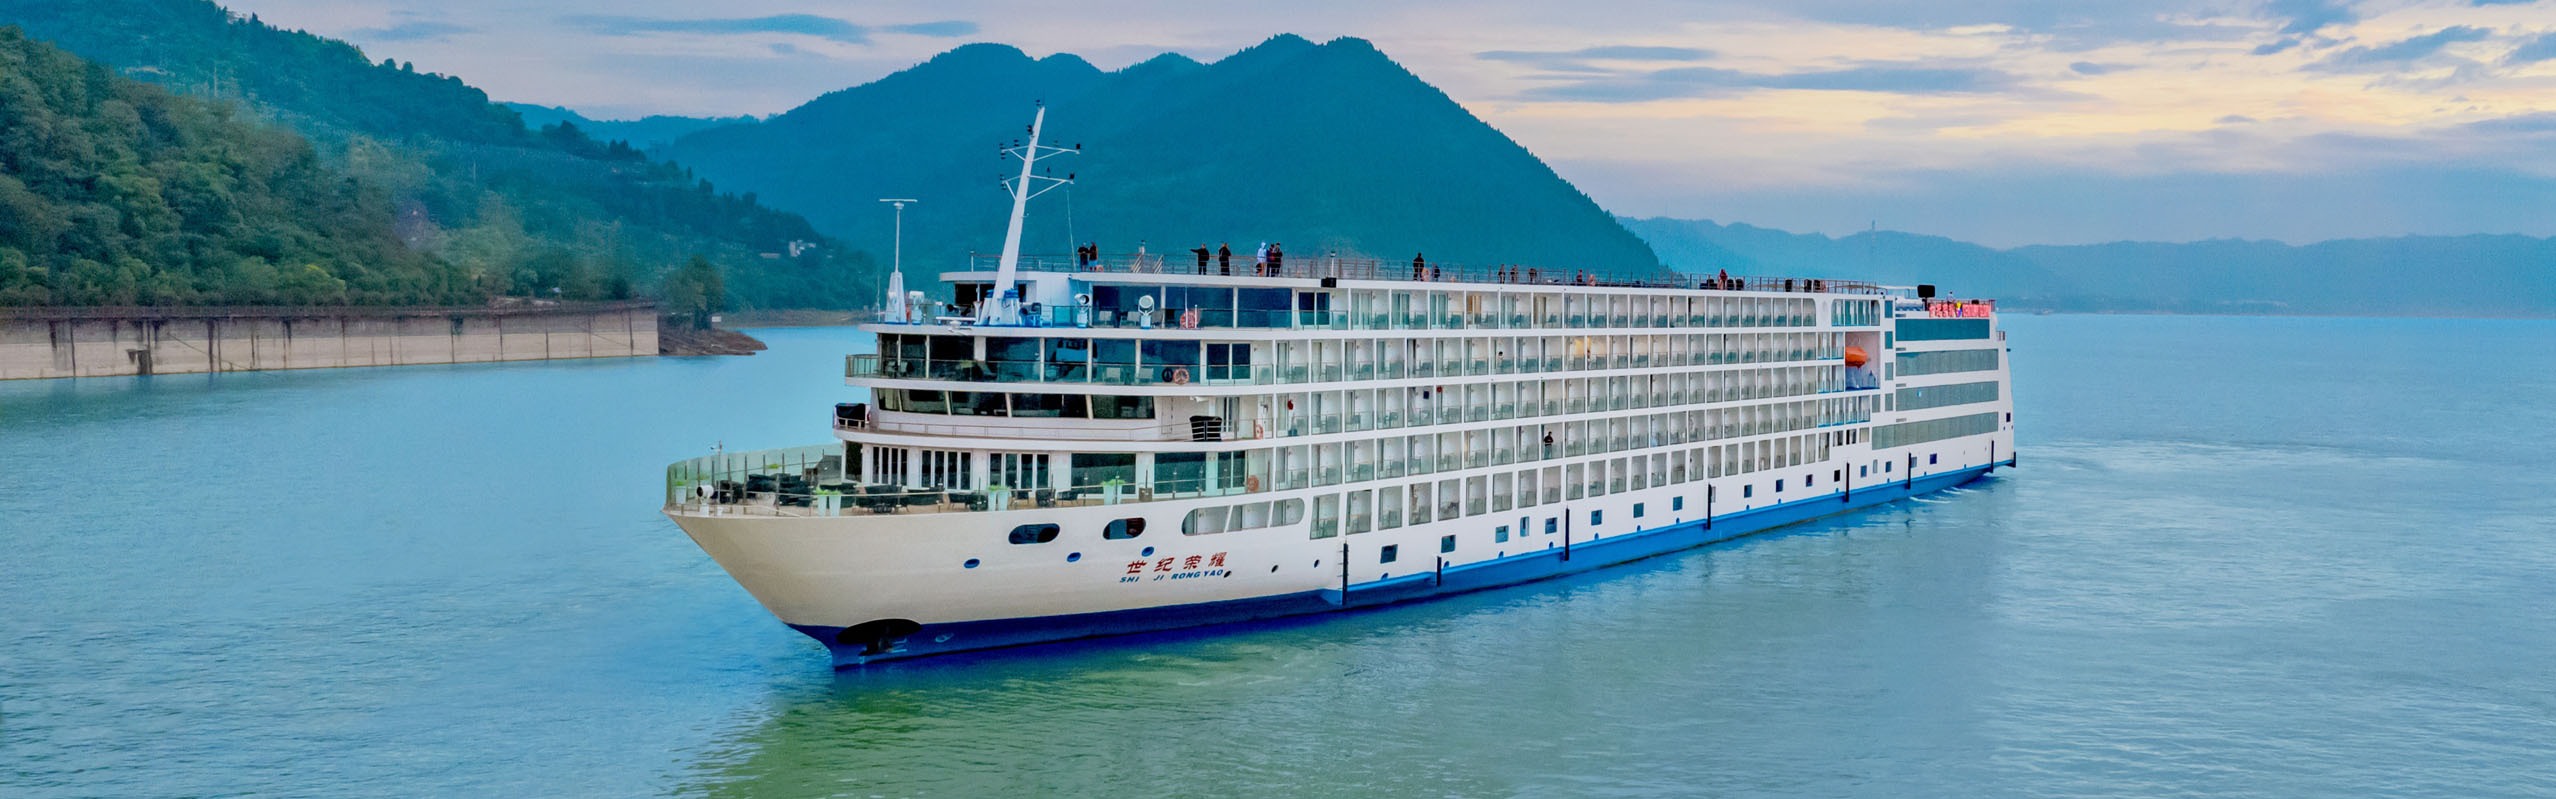 Century Glory - Century Cruises New Flagship River Cruise Ship